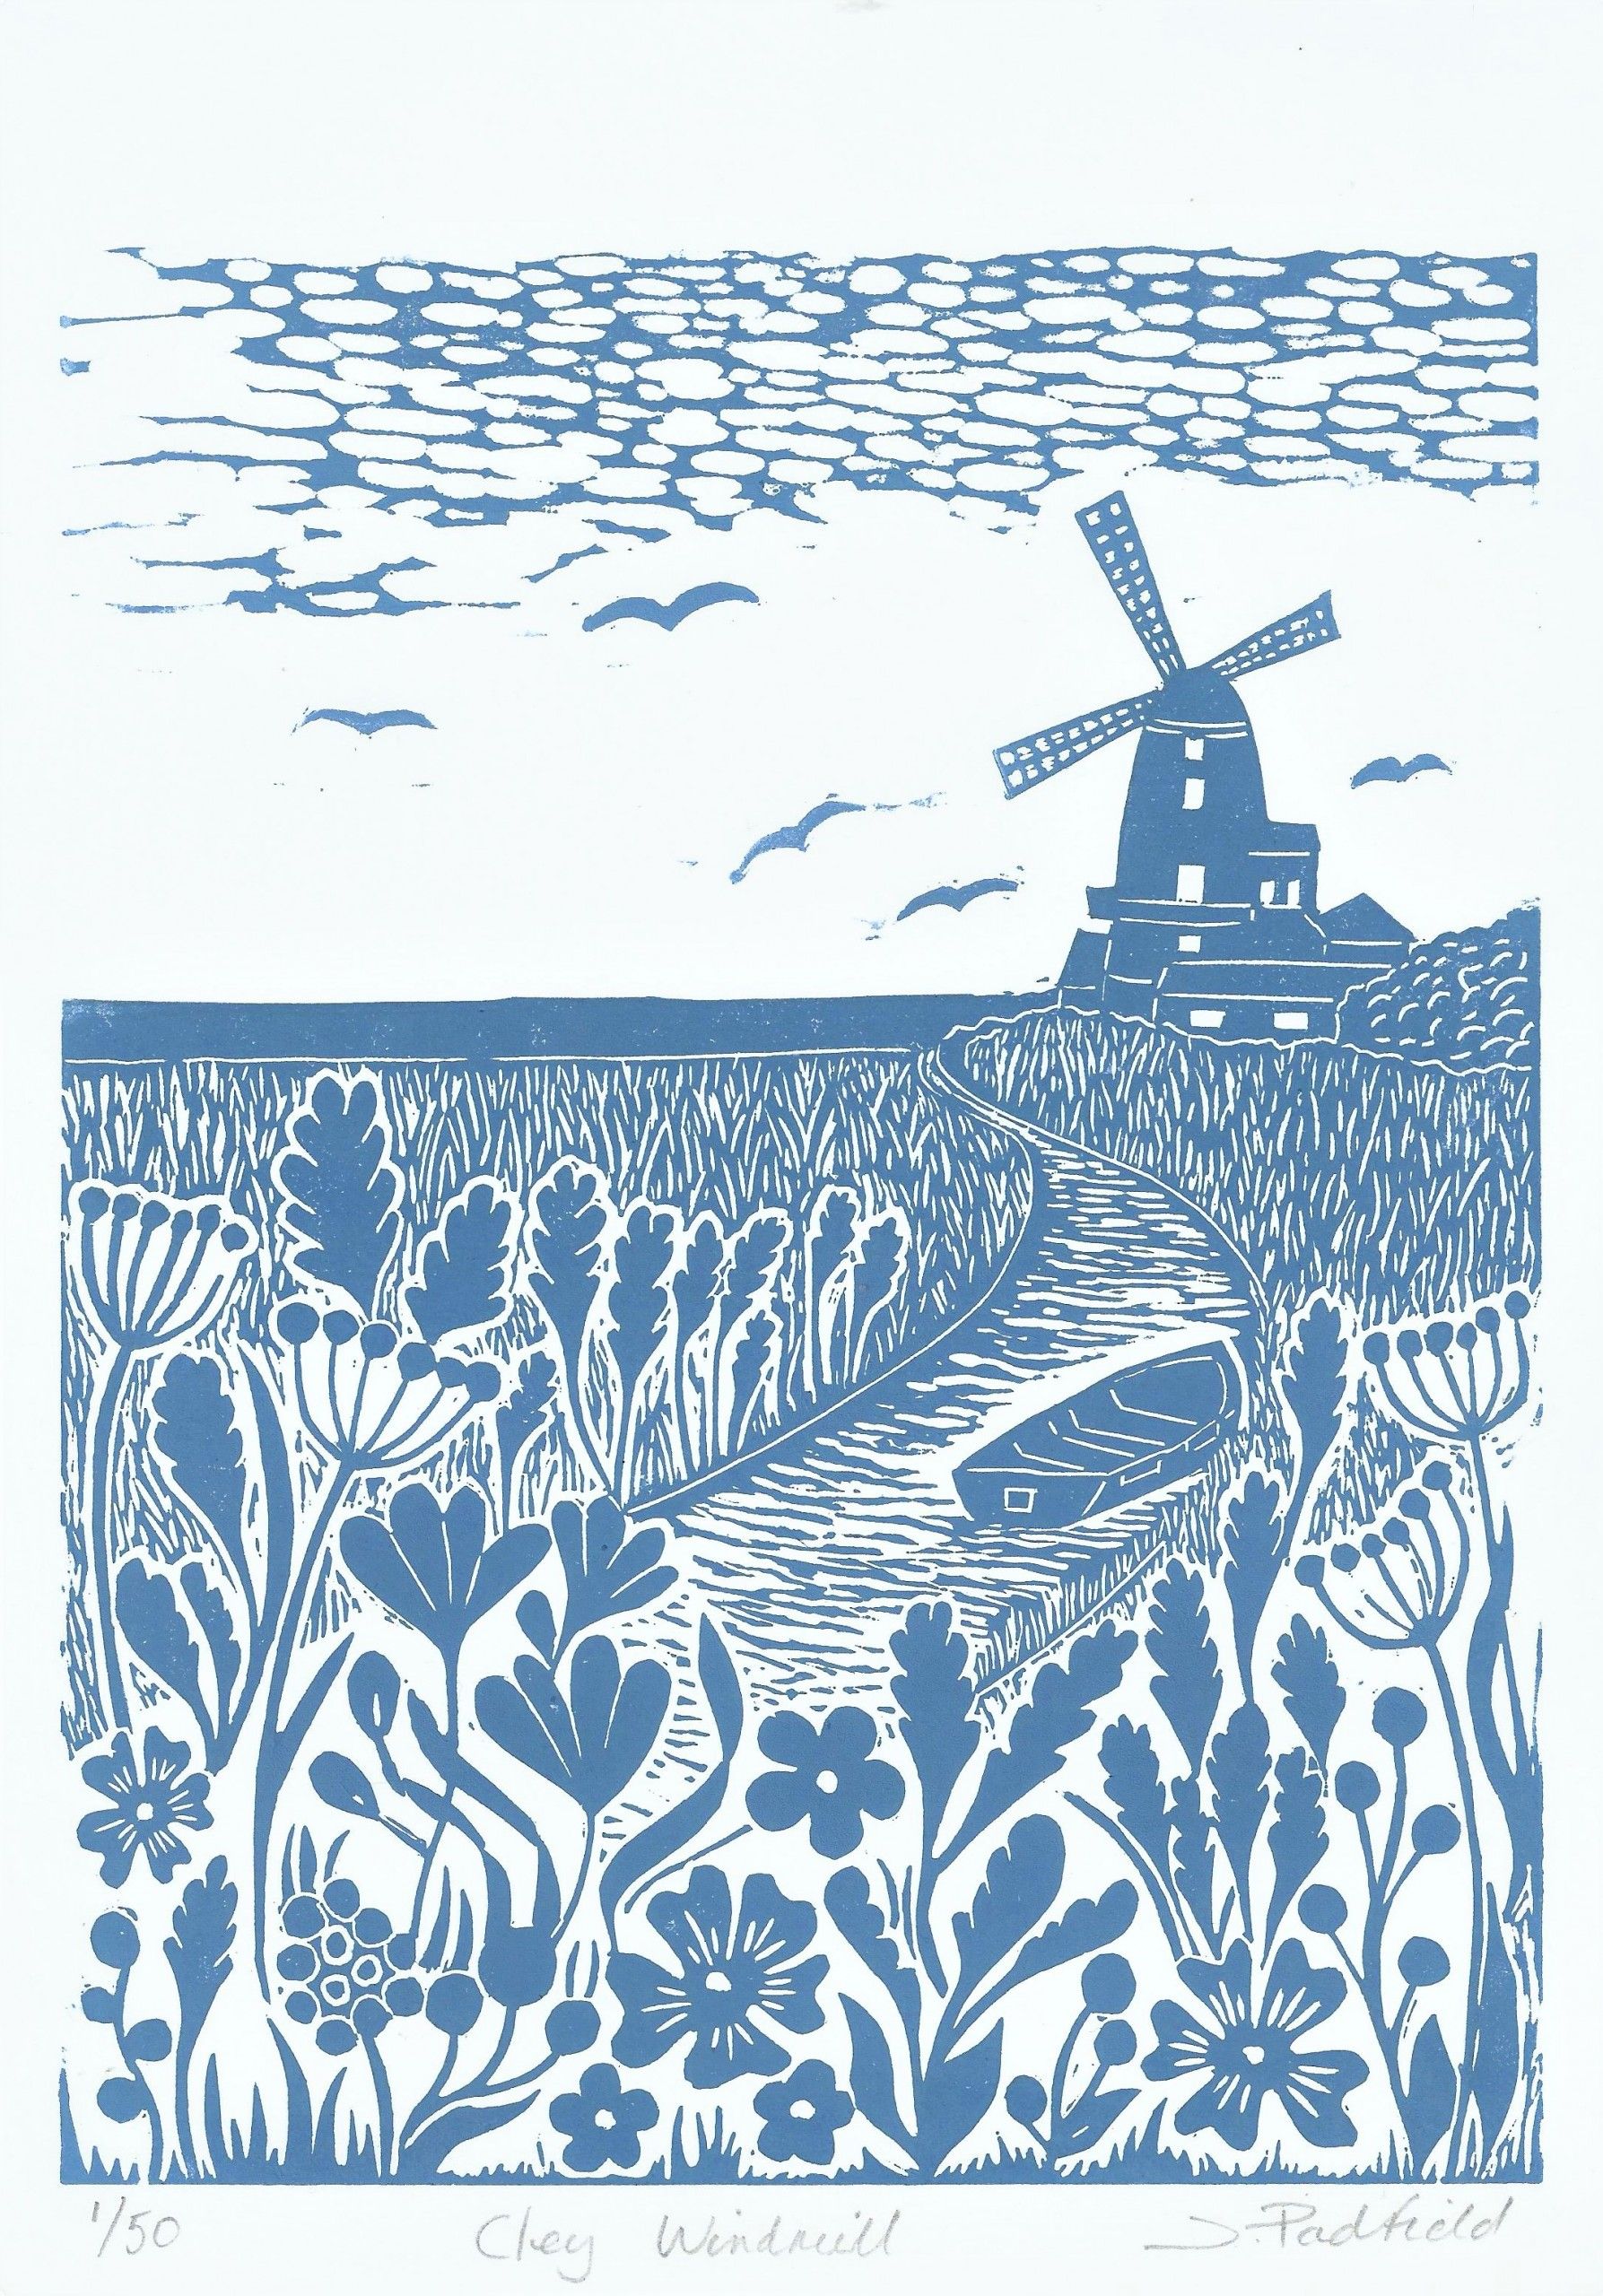 Cley Windmill by Joanna Padfield